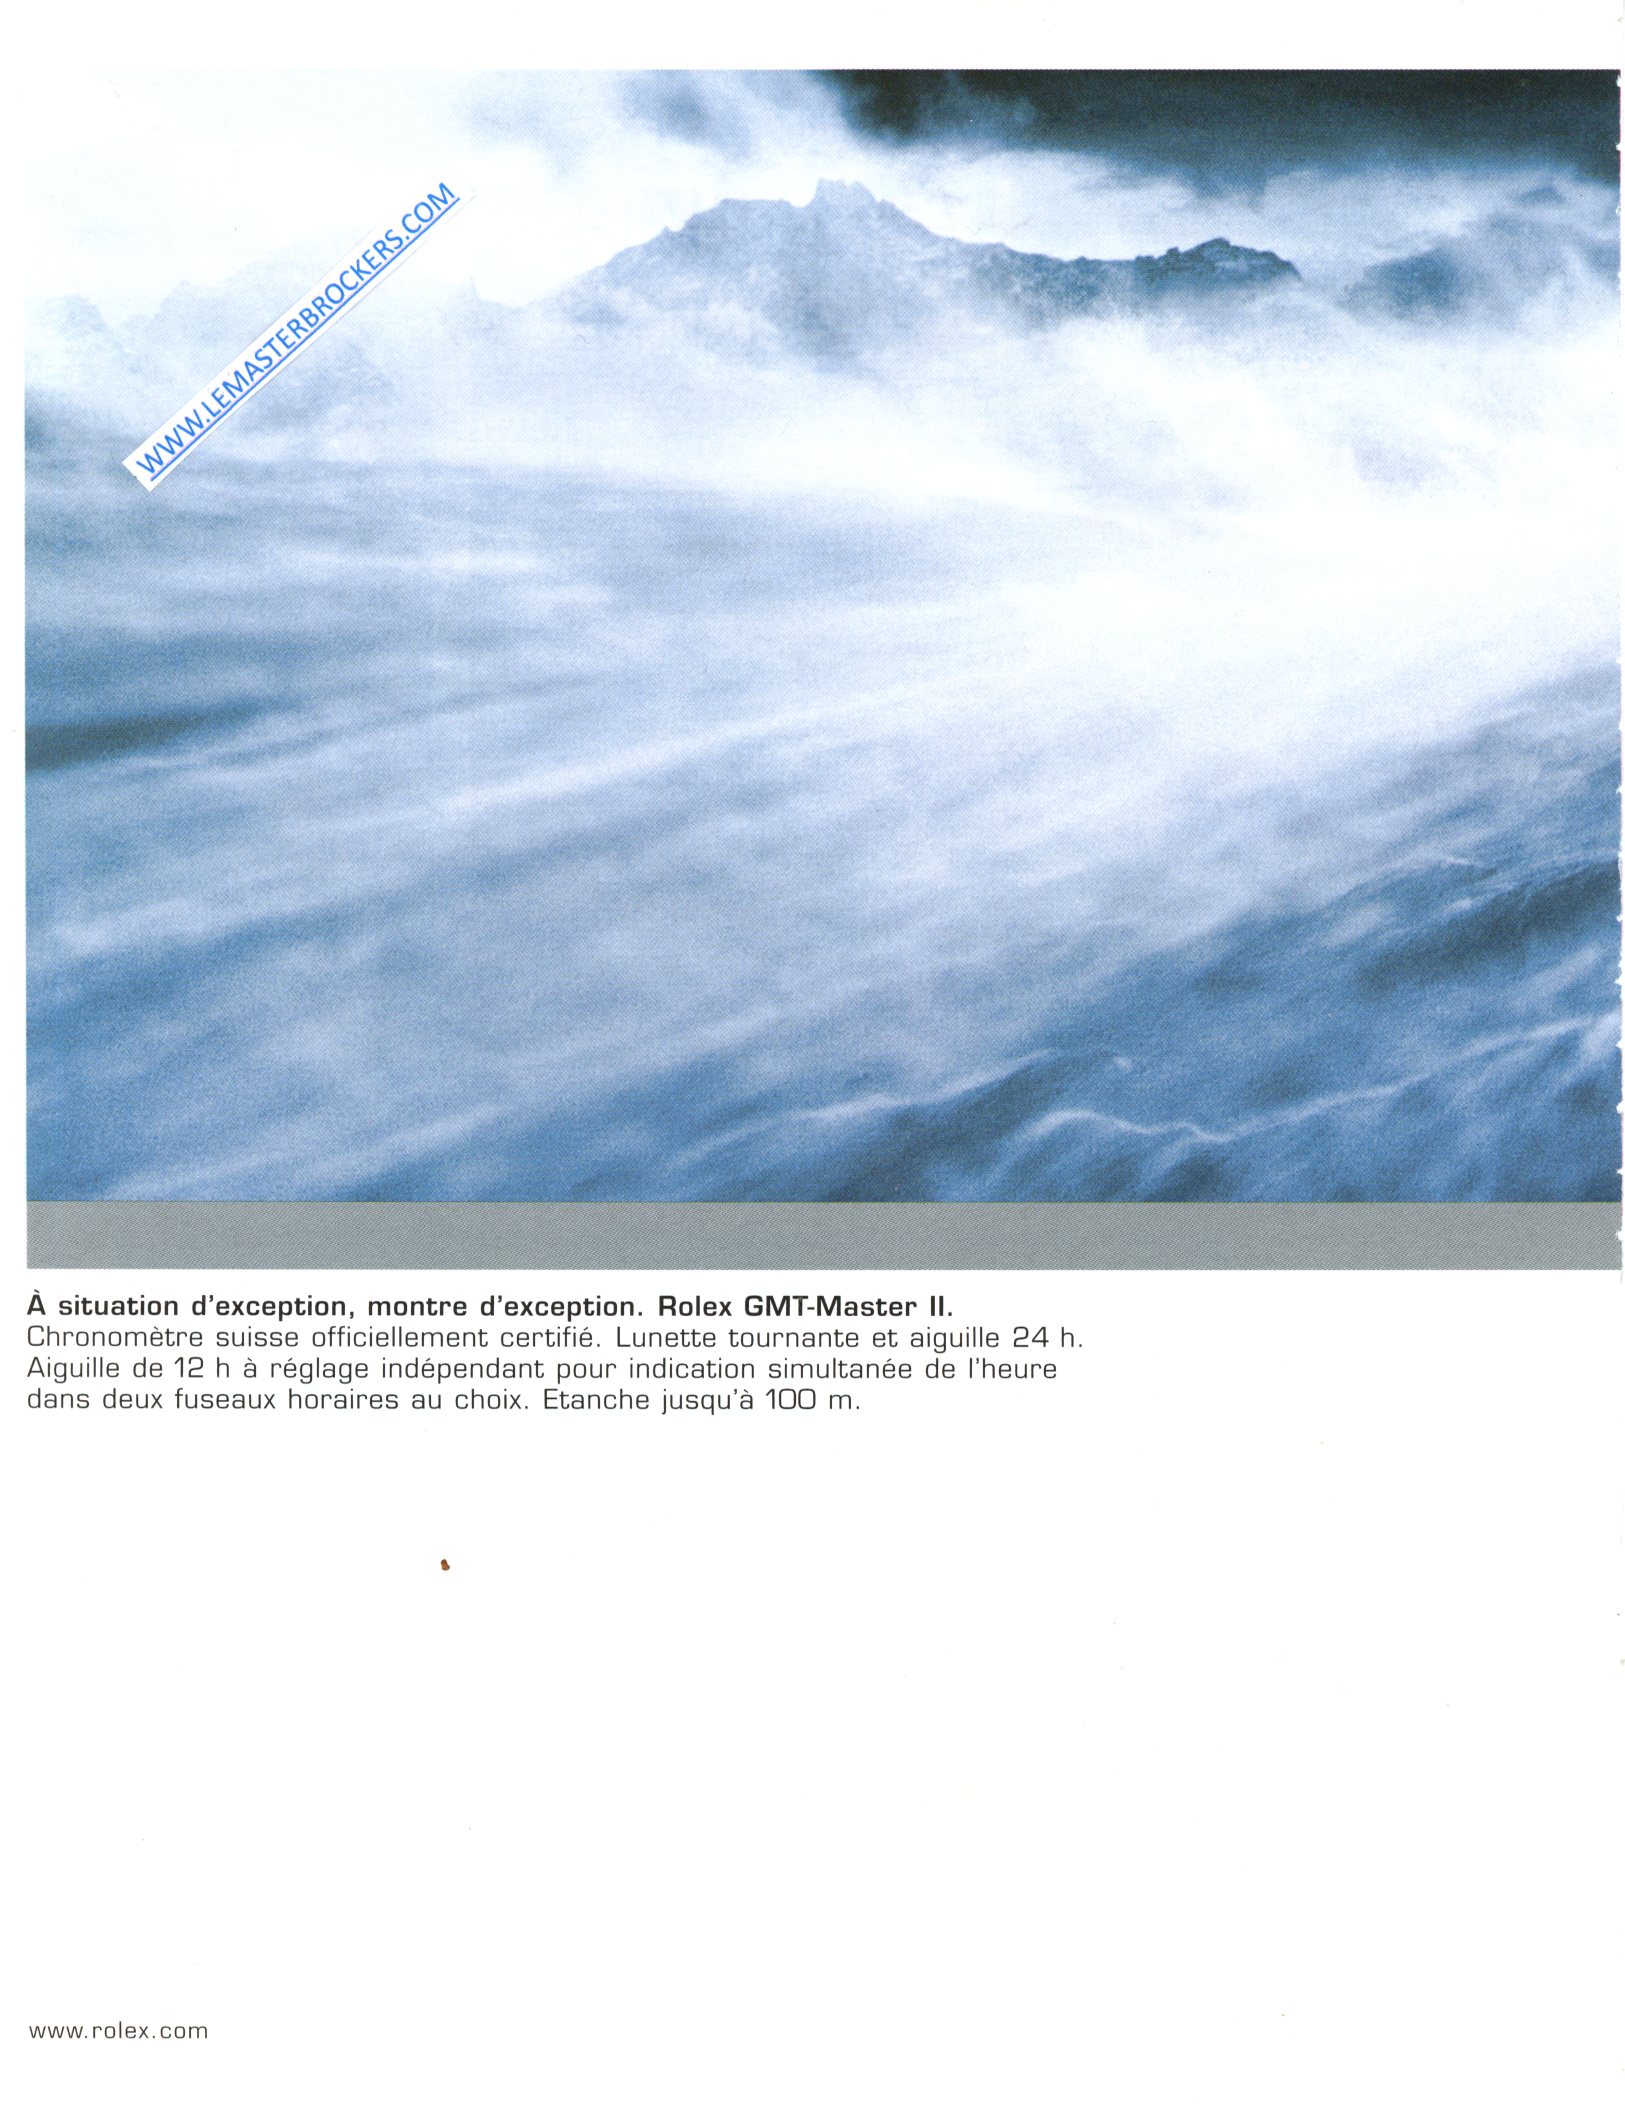 PUBLICITÉ ADVERTISING 2001 ROLEX PERPETUAL SPIRIT LEMASTERBROCKERS